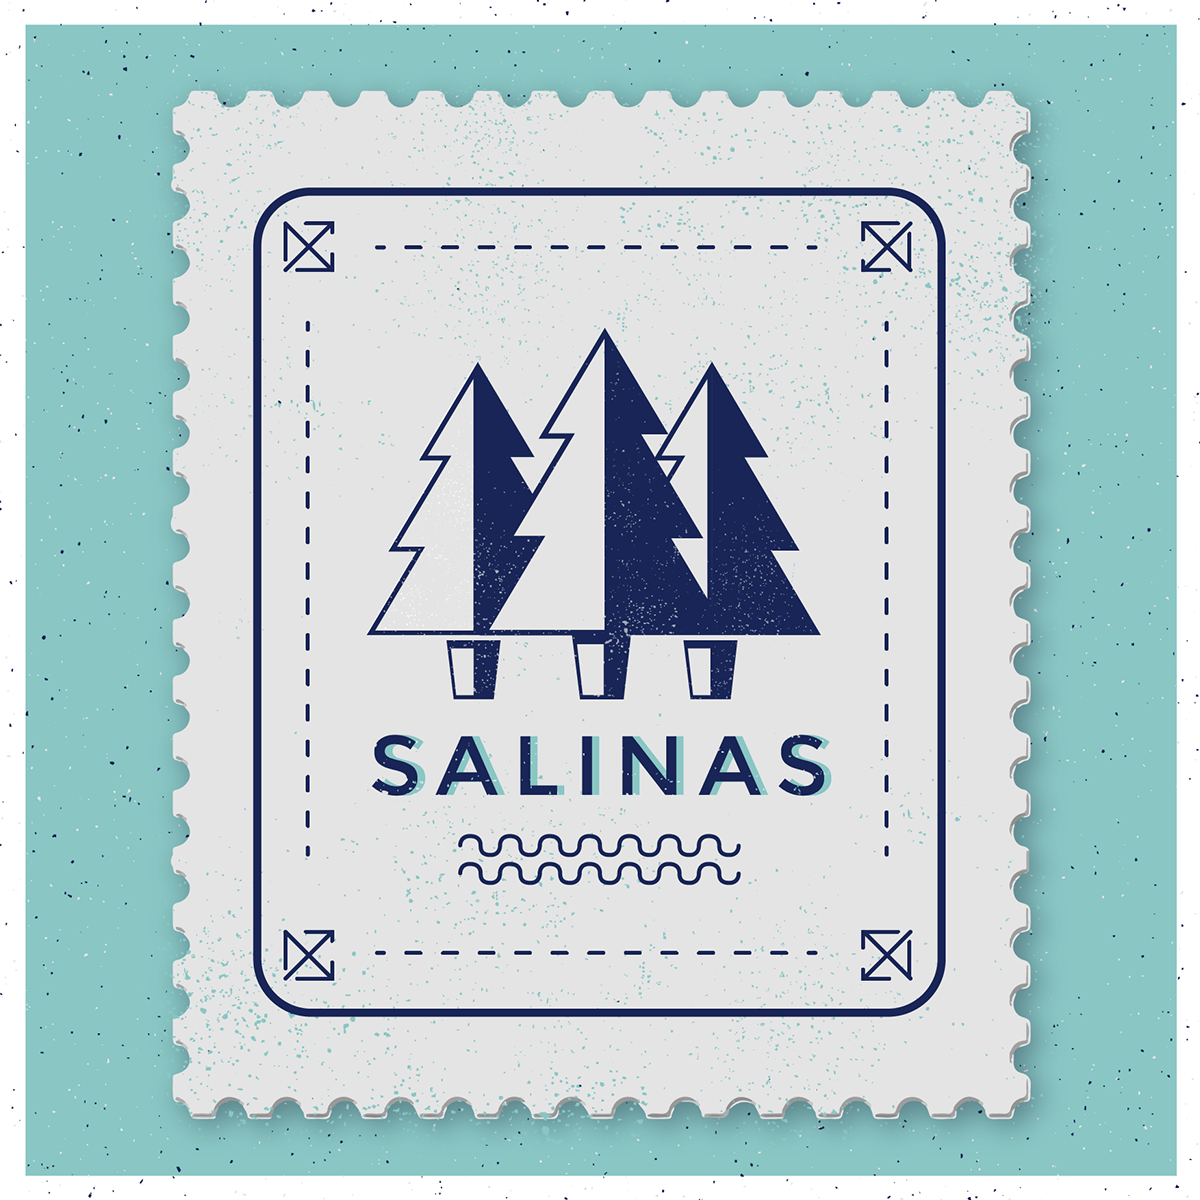 salinas asturias stamp Stamp Design Collection salinas stamps msinclan maria suarez inclan anchor ice cream cider illo Surf